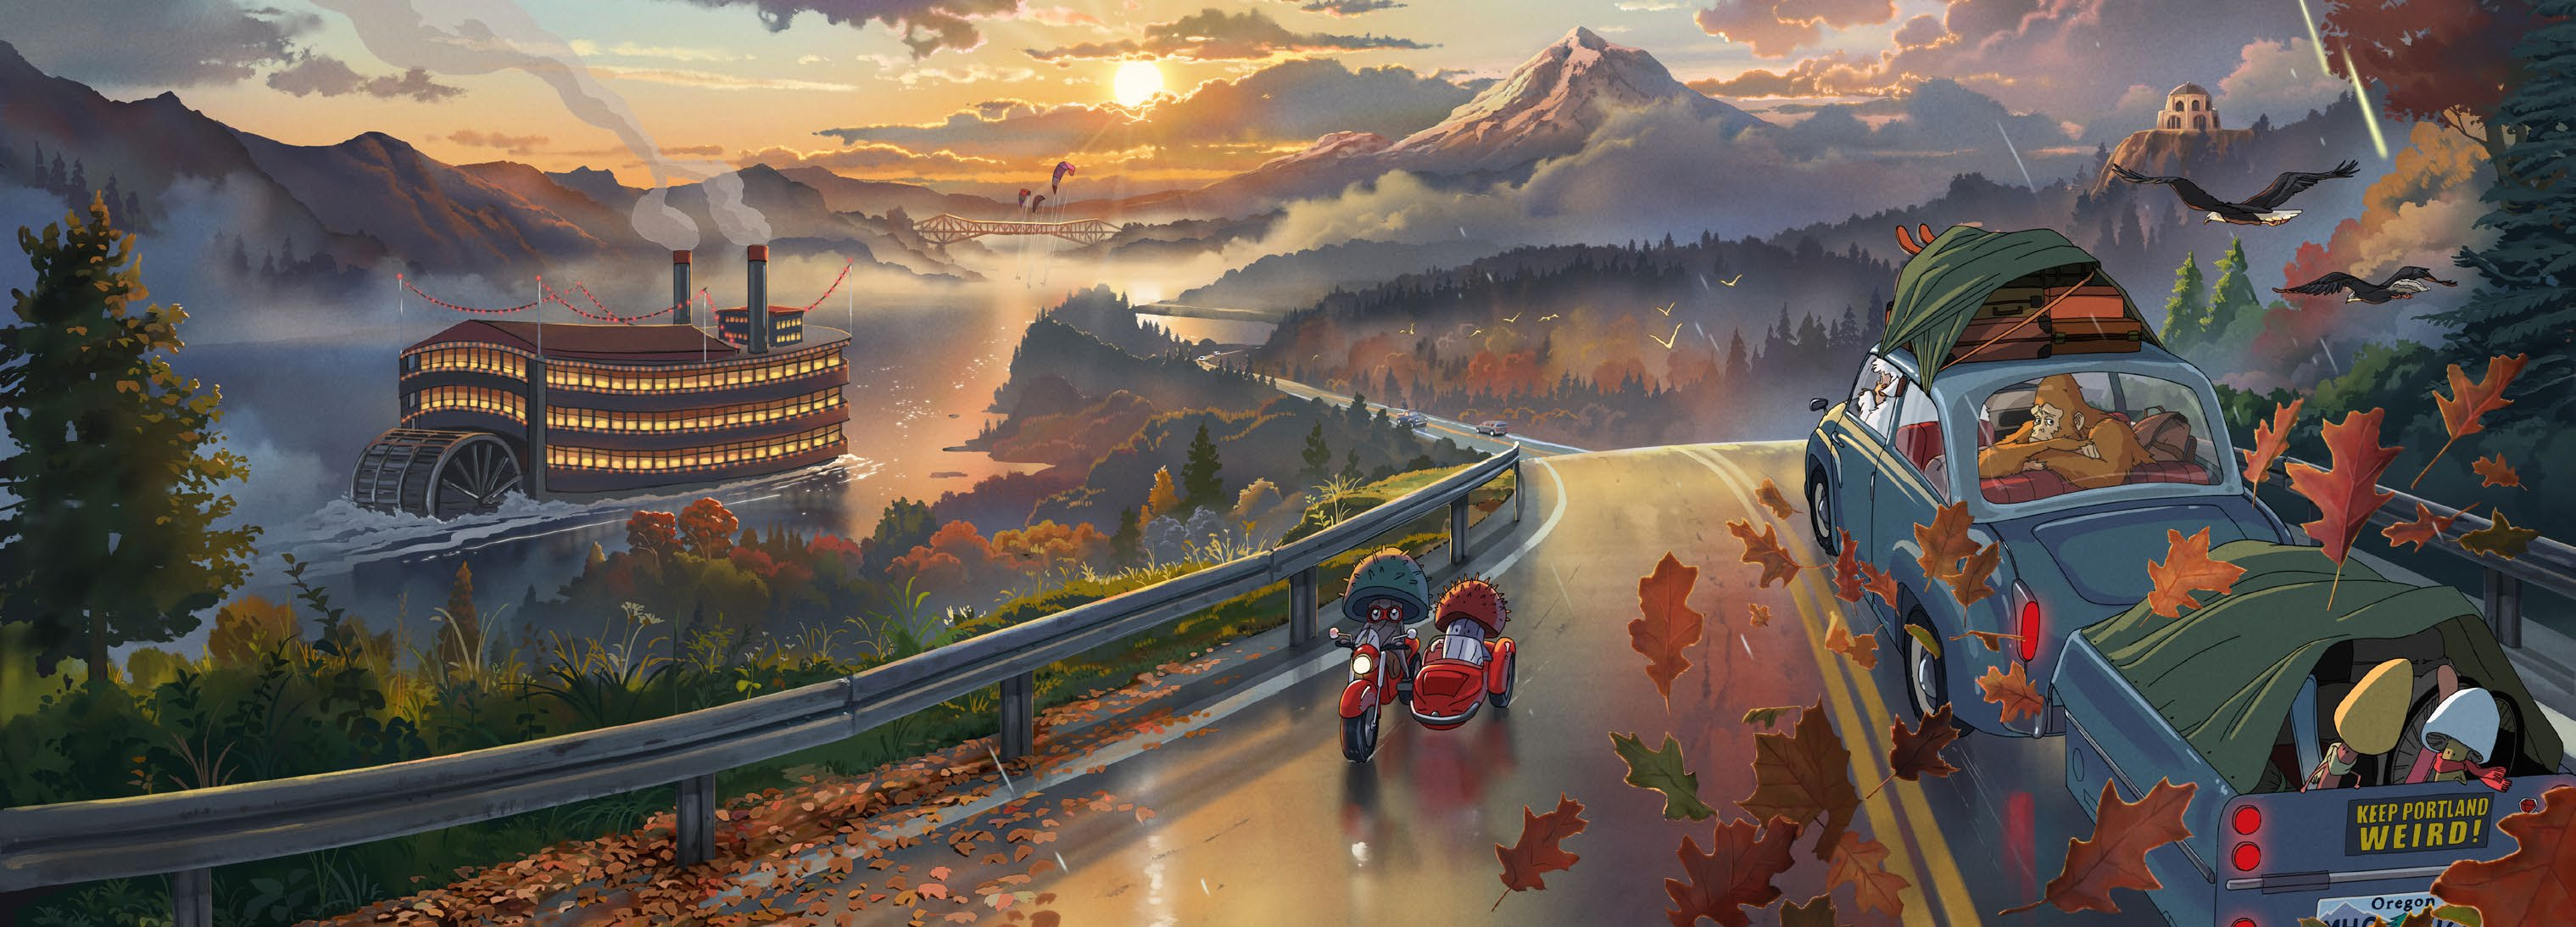 General 3038x1093 Oregon Portland Studio Ghibli Hayao Miyazaki Yeti sasquatch squatch digital painting landscape vacation roadtrip anime